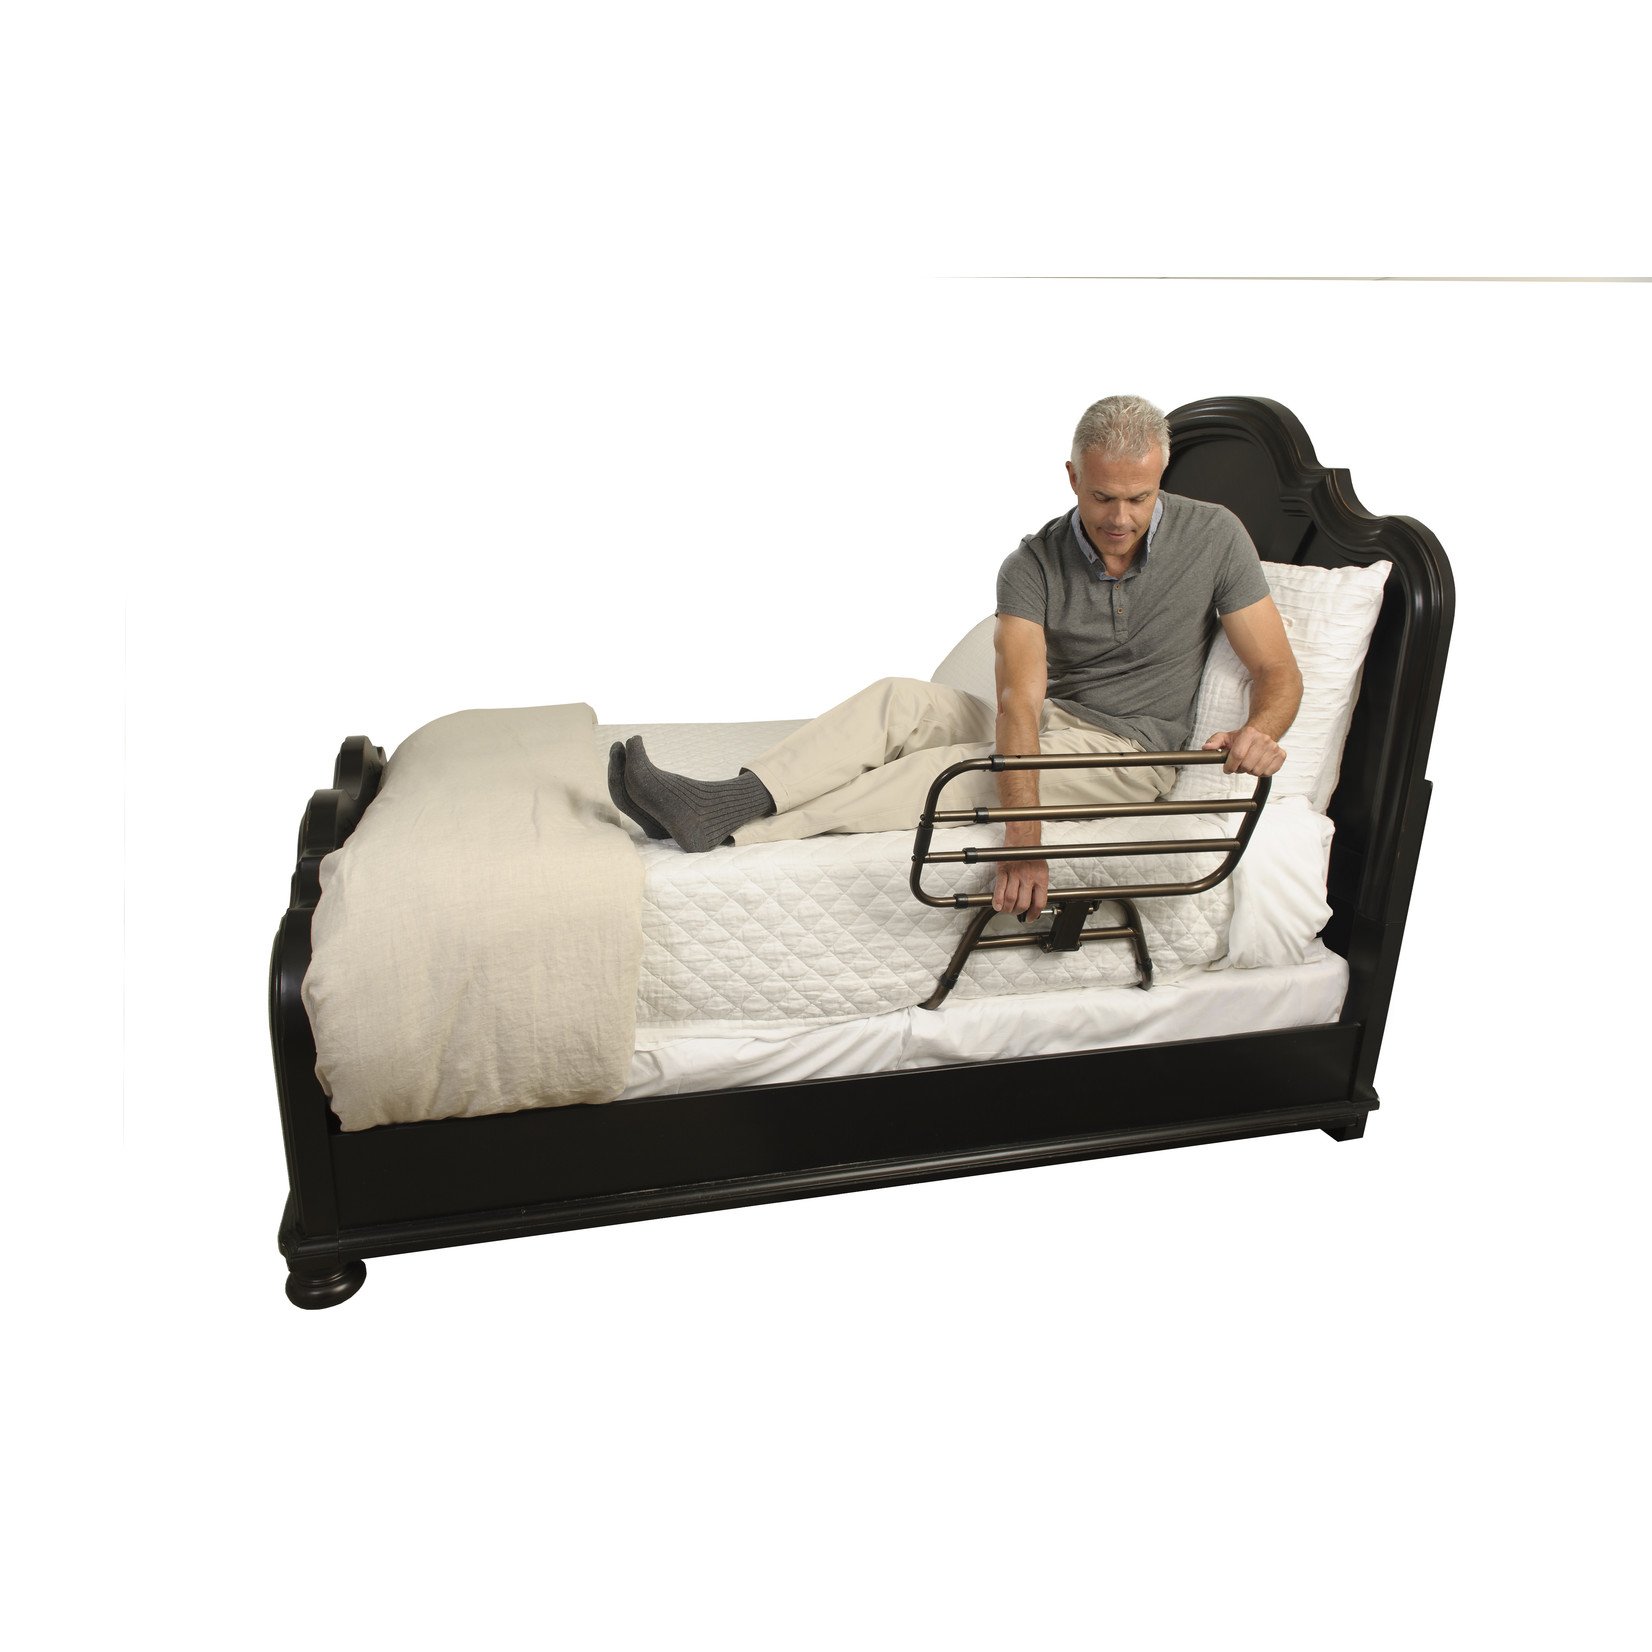 Signature Life Sleep Safe Home Bed Rail